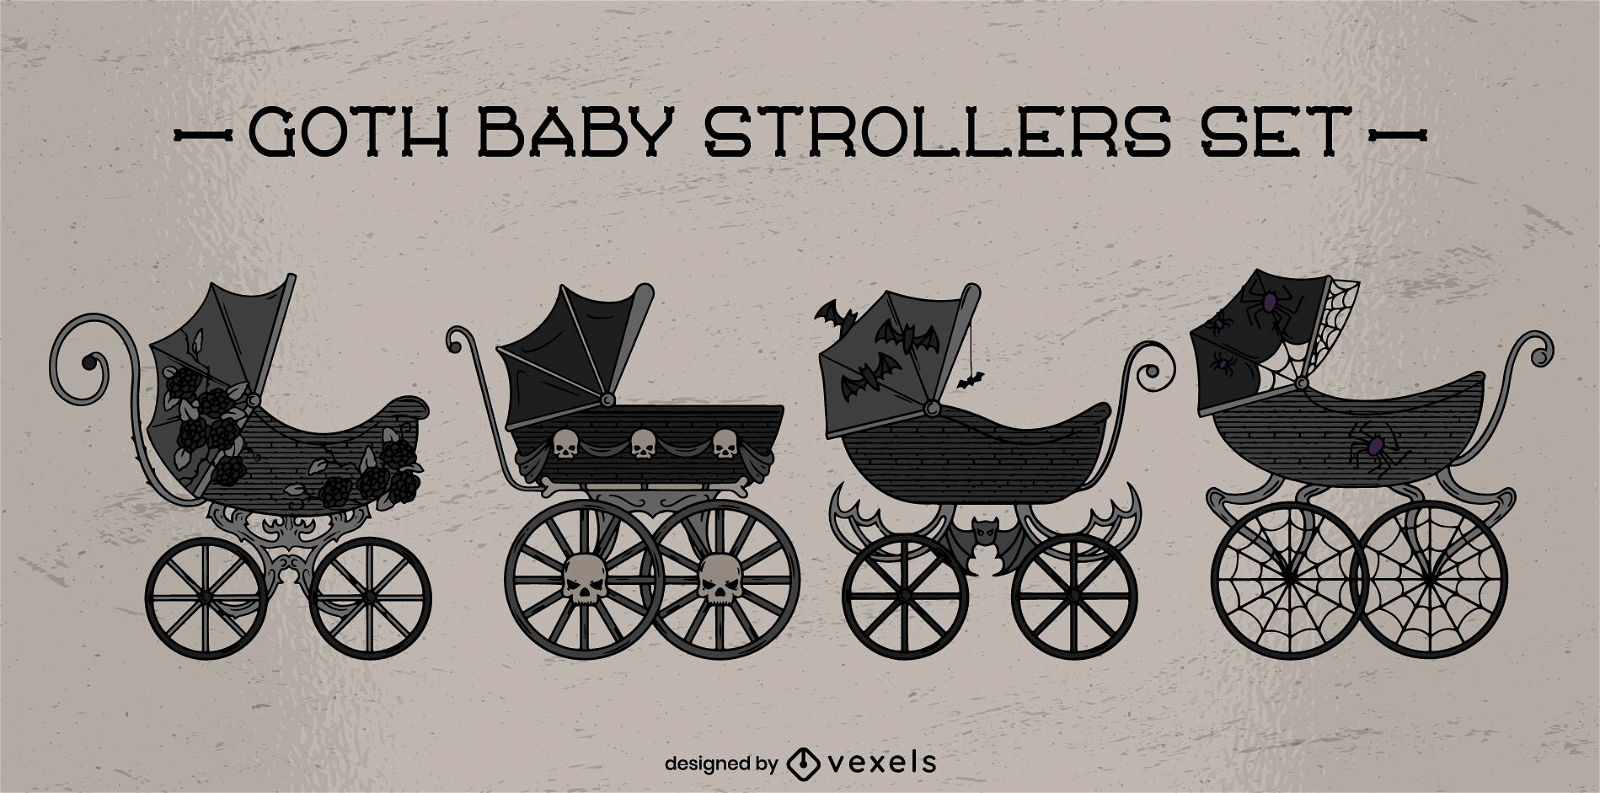 Goth baby strollers set